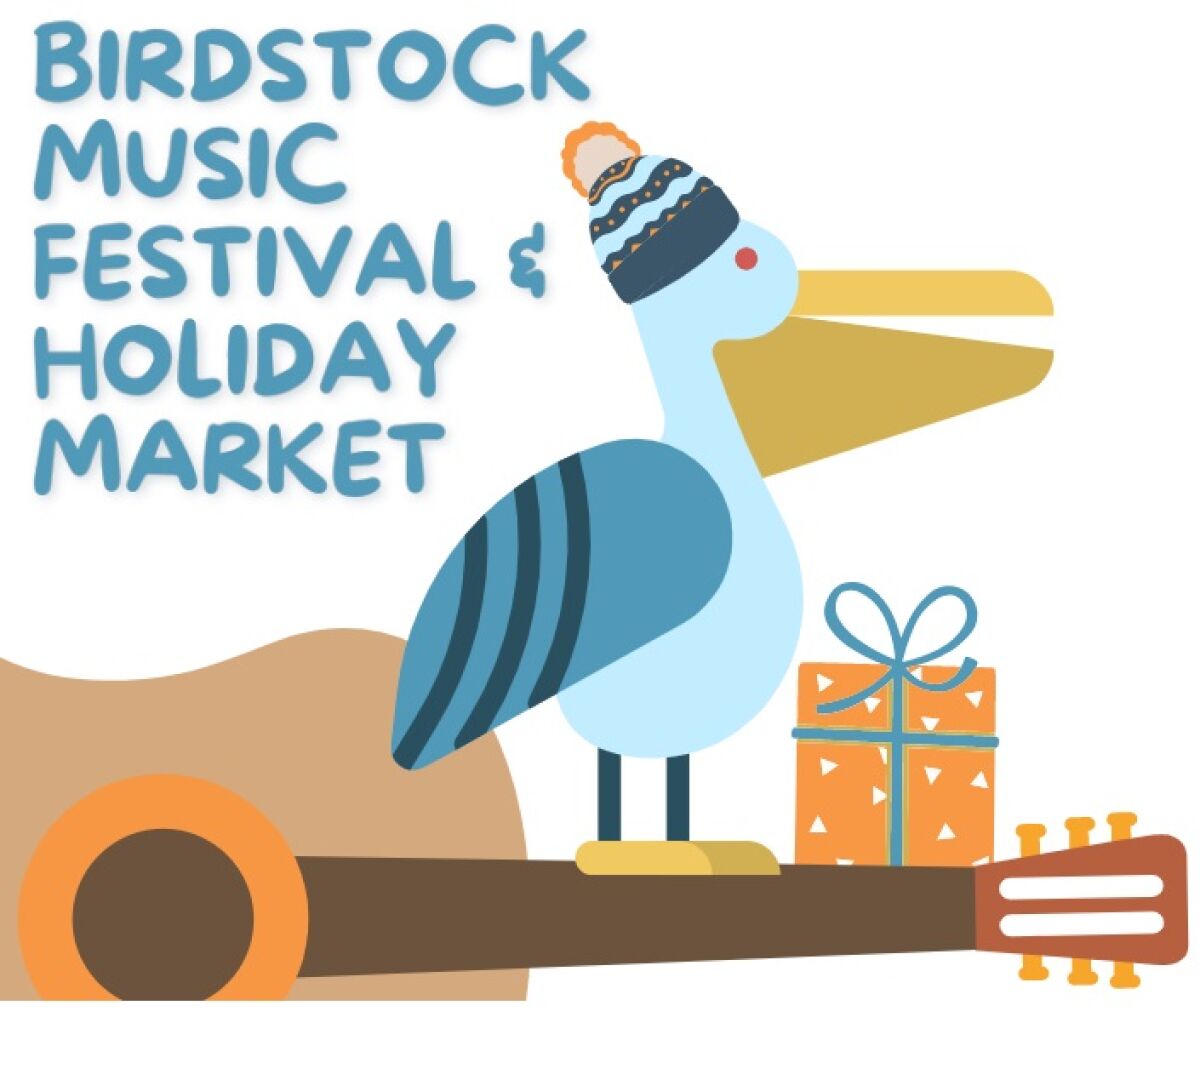 BirdStock is being revived in December, 12 years after it was last held.